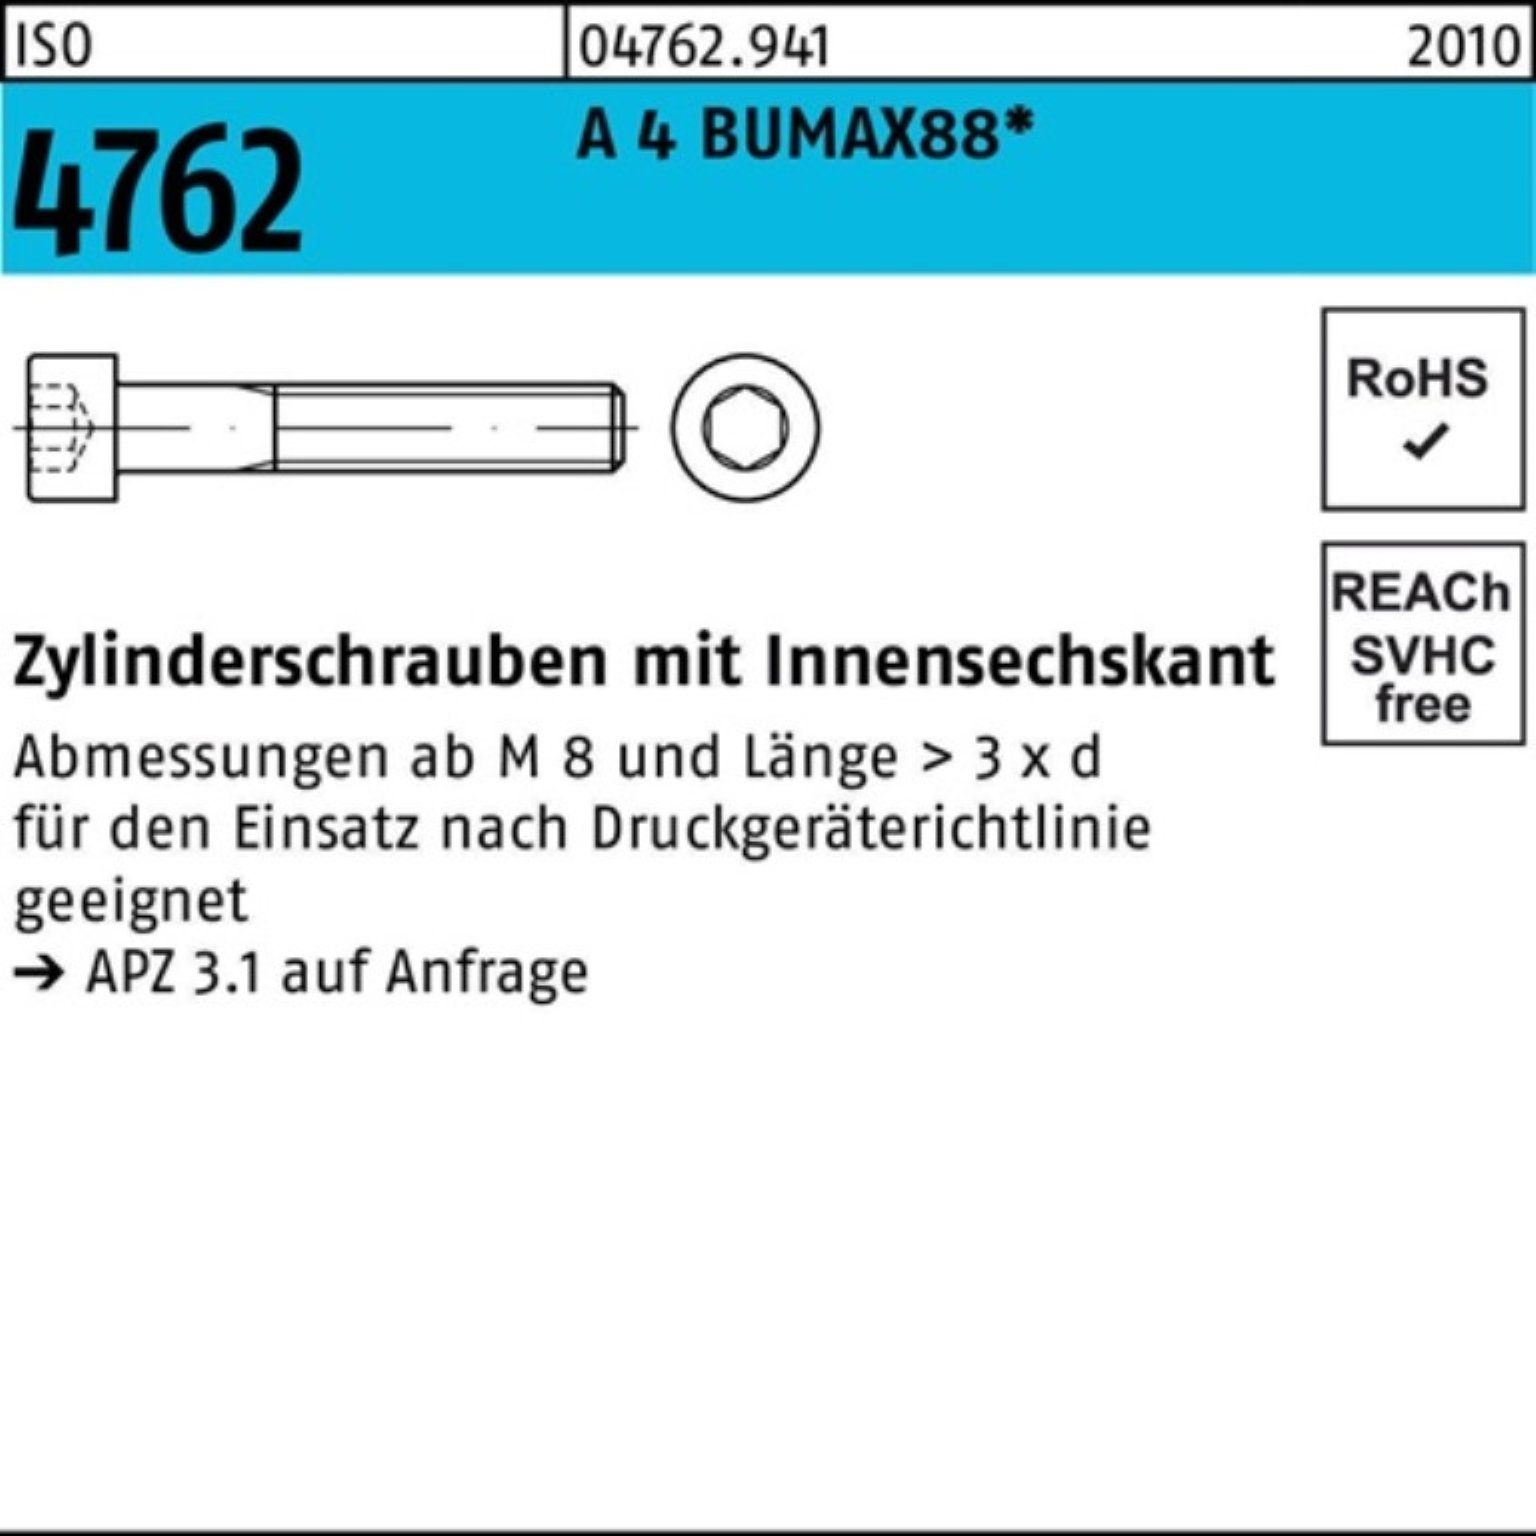 Pack S Zylinderschraube 25 4 A ISO Innen-6kt Zylinderschraube Bufab 50 4762 BUMAX88 M8x 100er